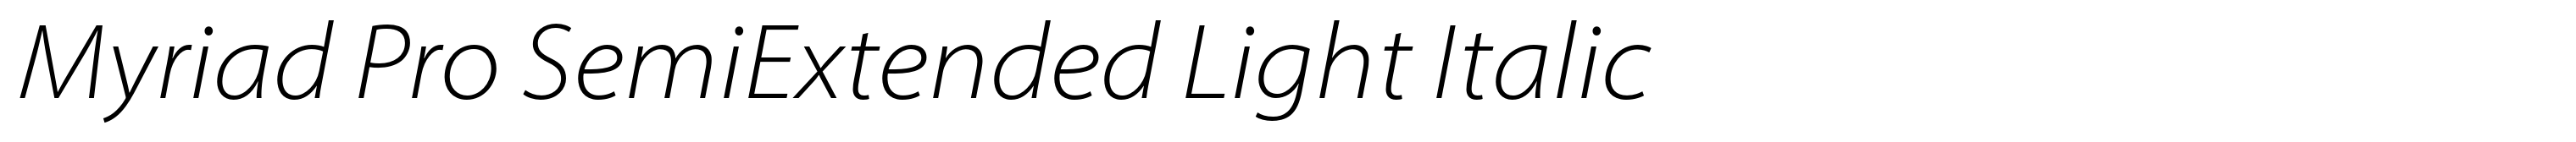 Myriad Pro SemiExtended Light Italic